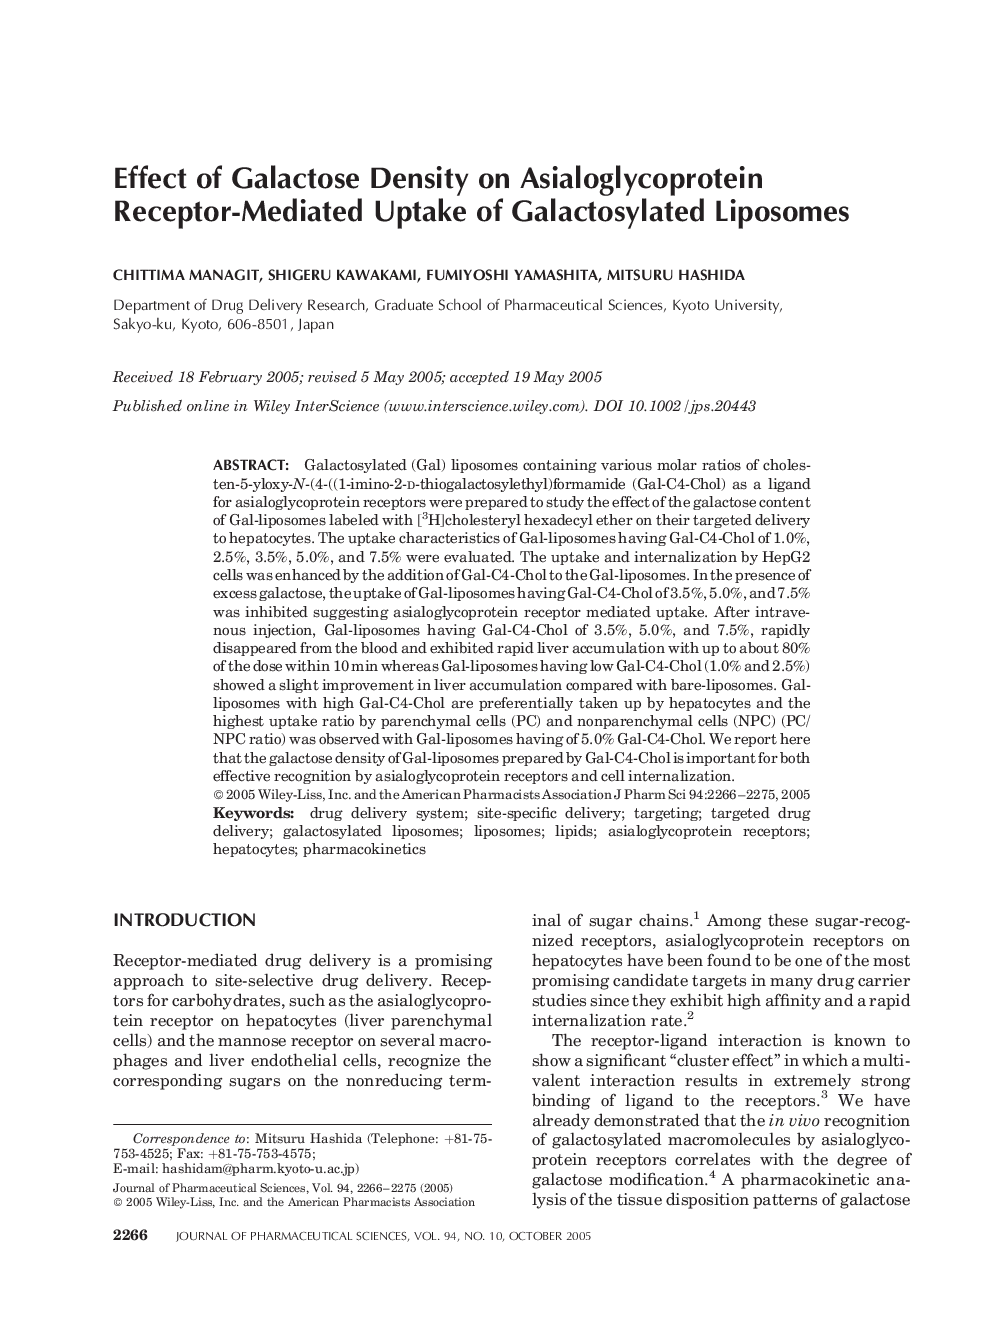 Effect of Galactose Density on Asialoglycoprotein Receptor-Mediated Uptake of Galactosylated Liposomes